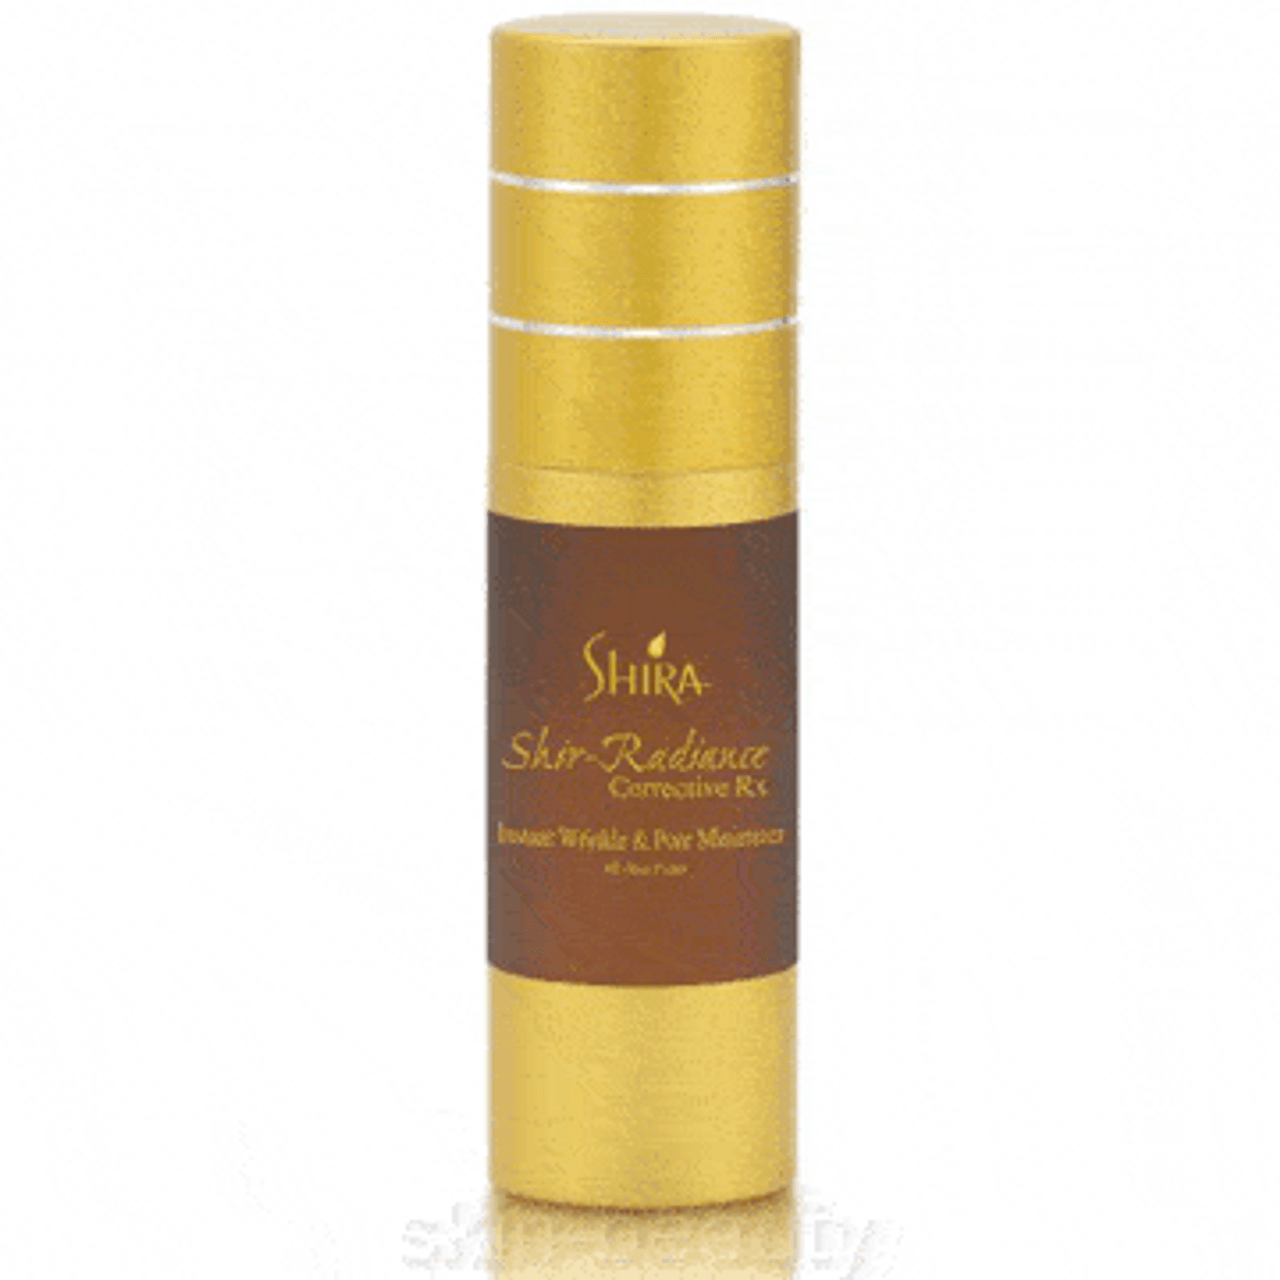 Shir-Radiance Corrective Rx Instant Wrinkle & Pore Minimizer - 1 oz